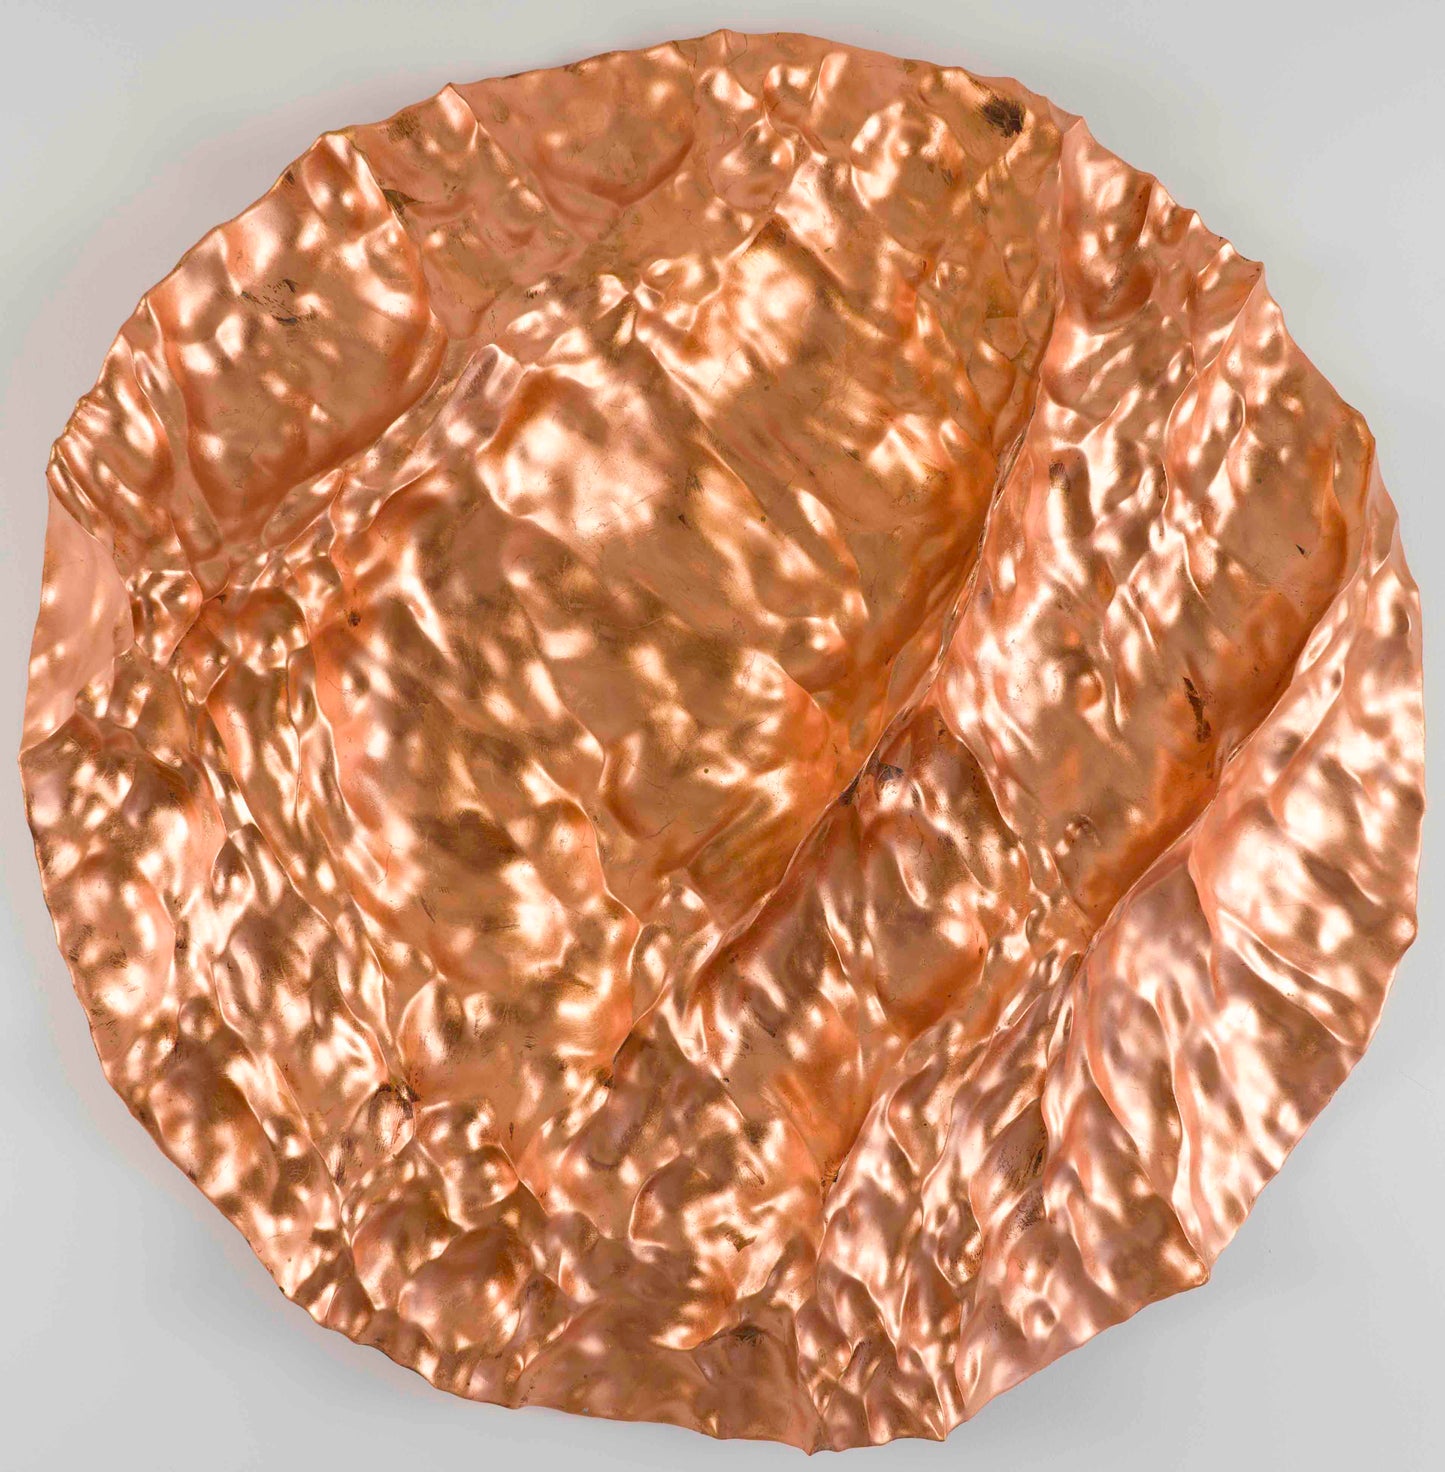 Isaac Katz, Oceana Circle Copper, resin and copper foil sculpture, 31.4 in diameter